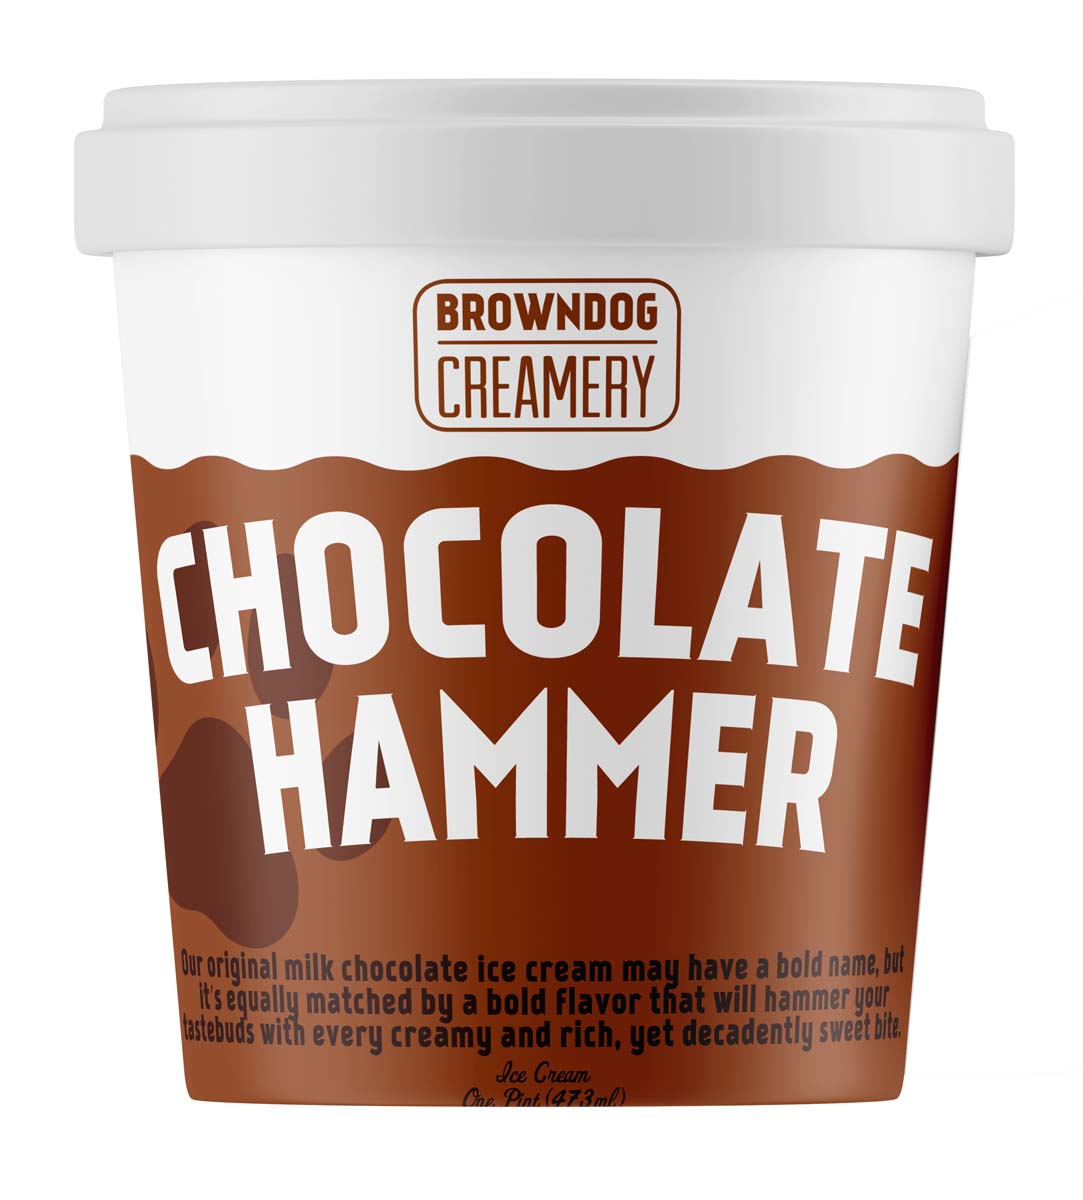 CHOCOLATE HAMMER ICE CREAM